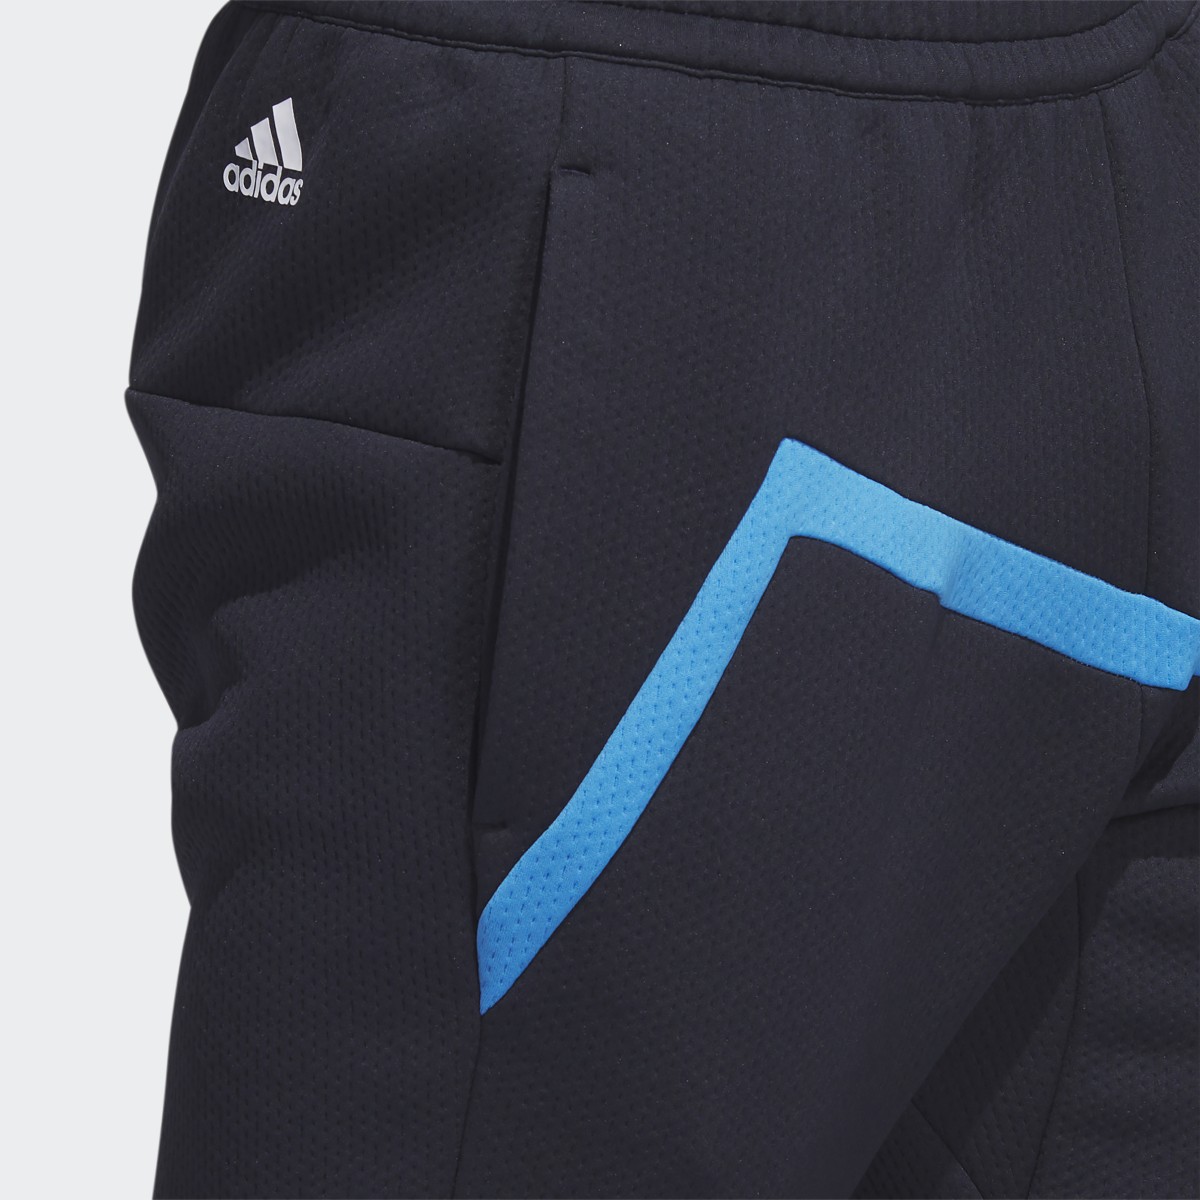 Adidas Trae HC Pants. 6